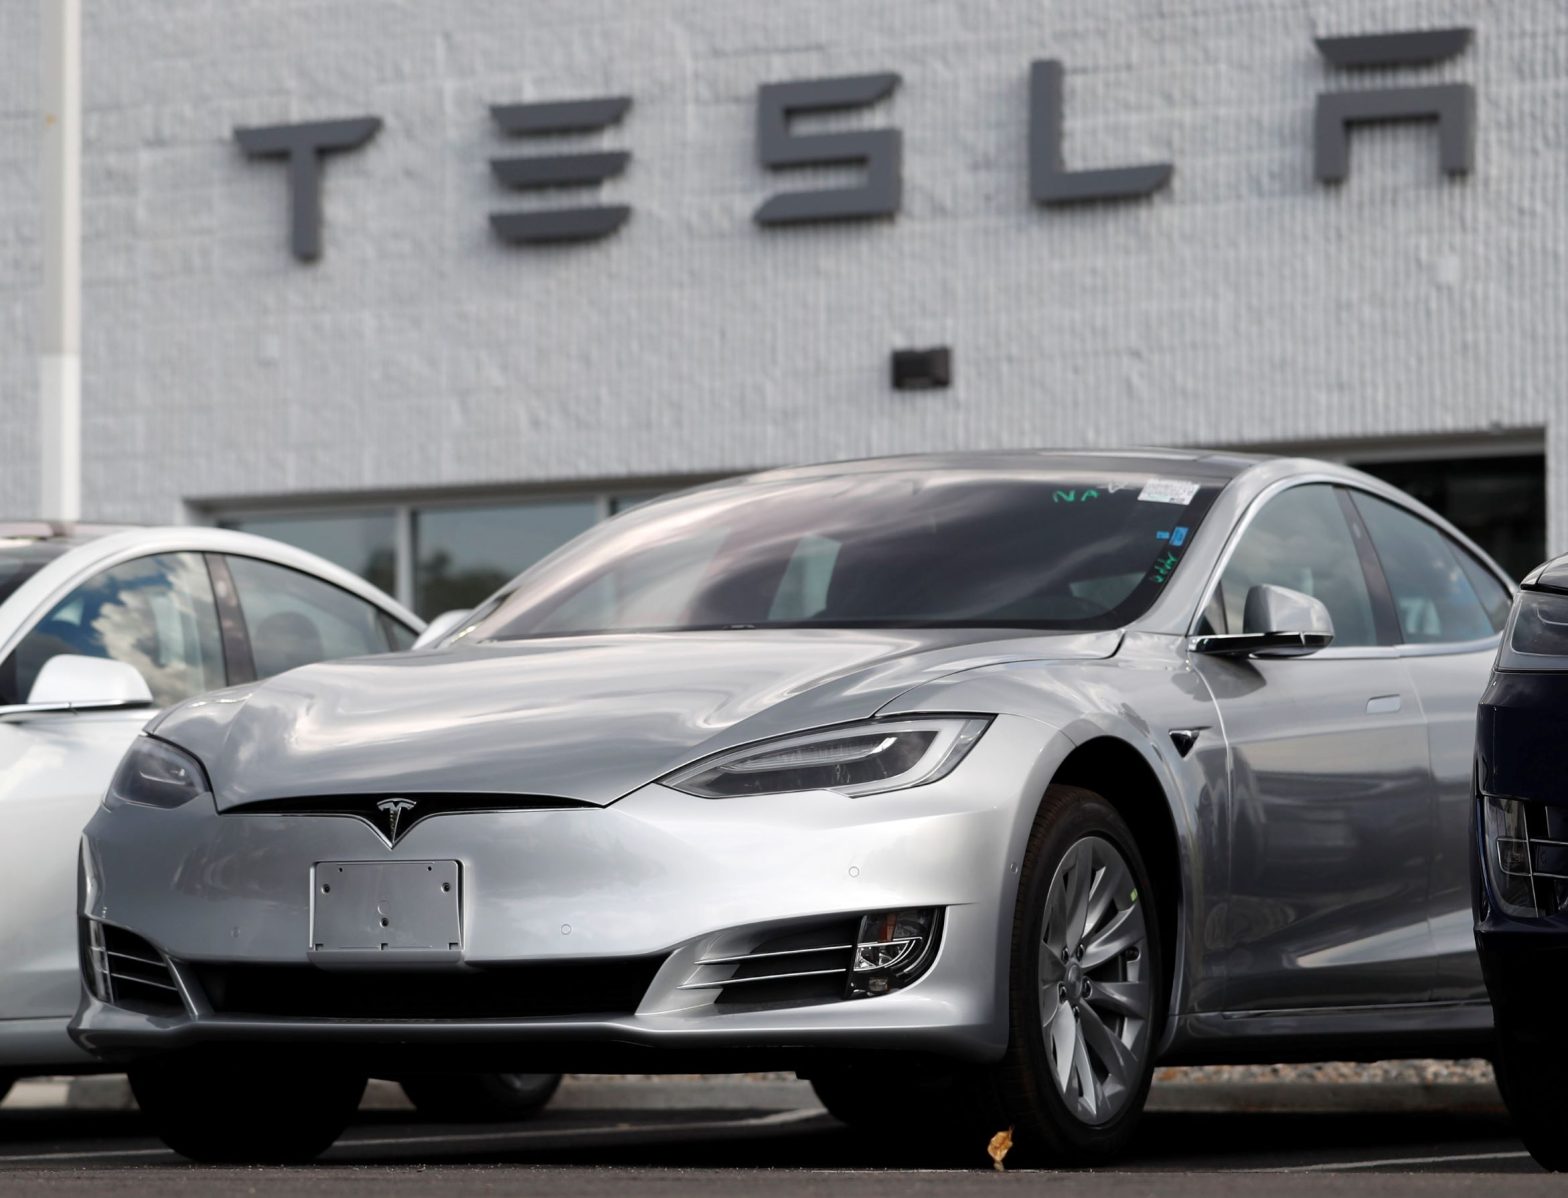 US Opens Formal Probe into Tesla Autopilot System